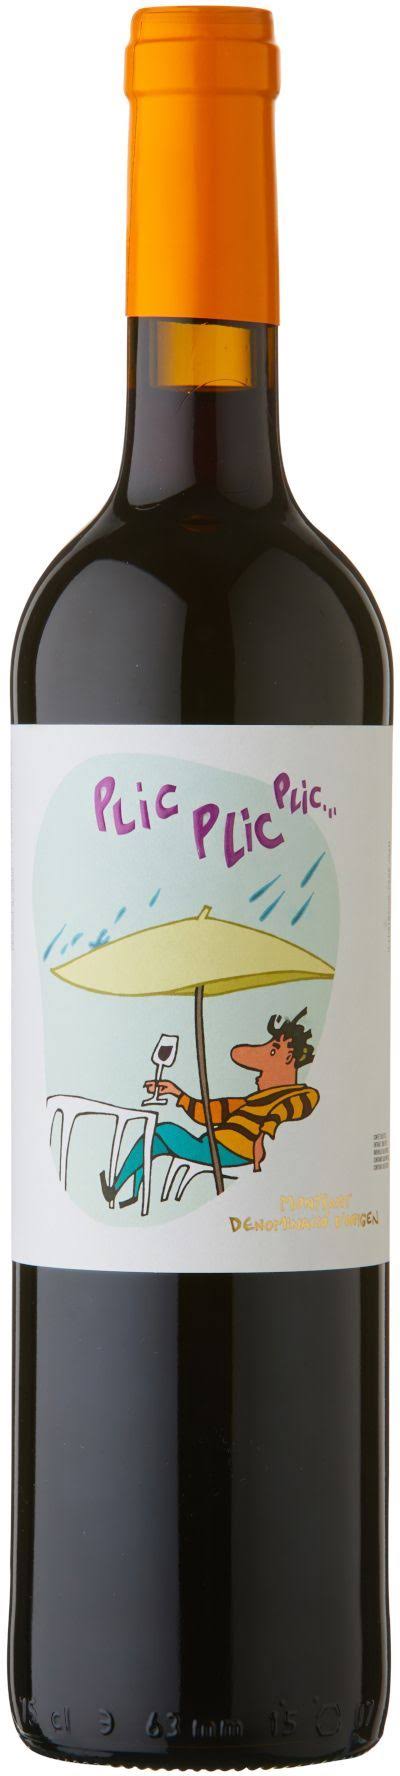 Plic Plic Plic - Mitchell & Son Wine Merchants